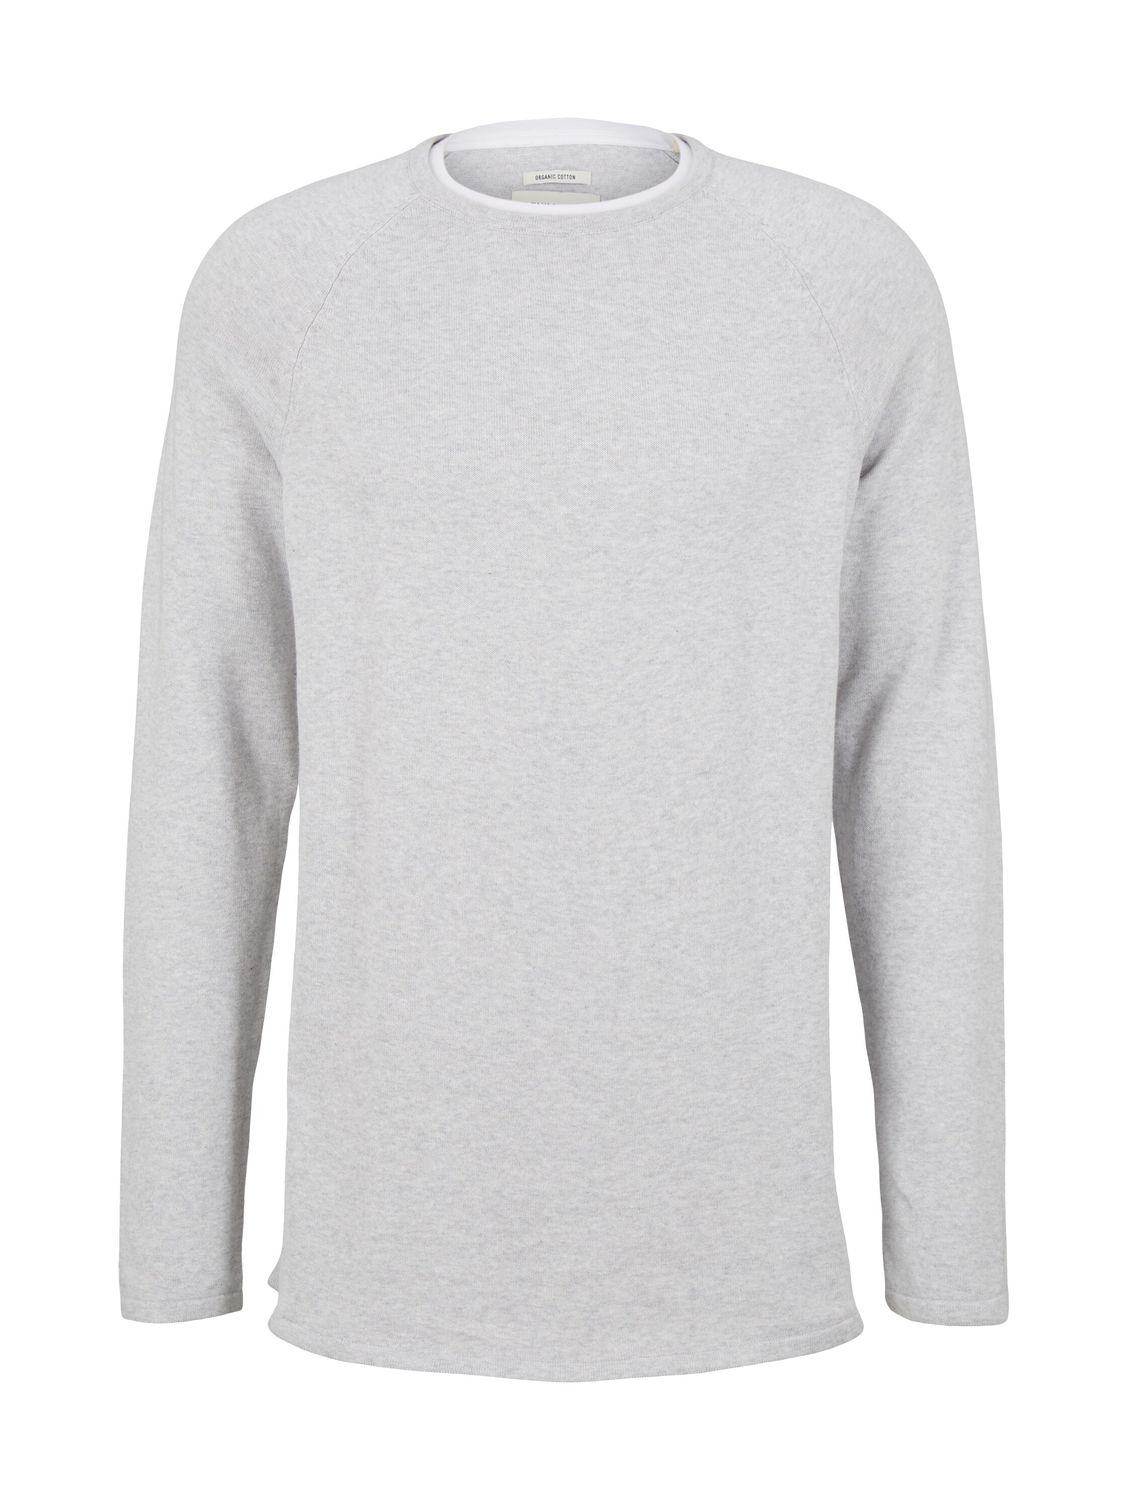 Пуловер TOM TAILOR Denim BASIC, серый пуловер tom tailor denim basic серый